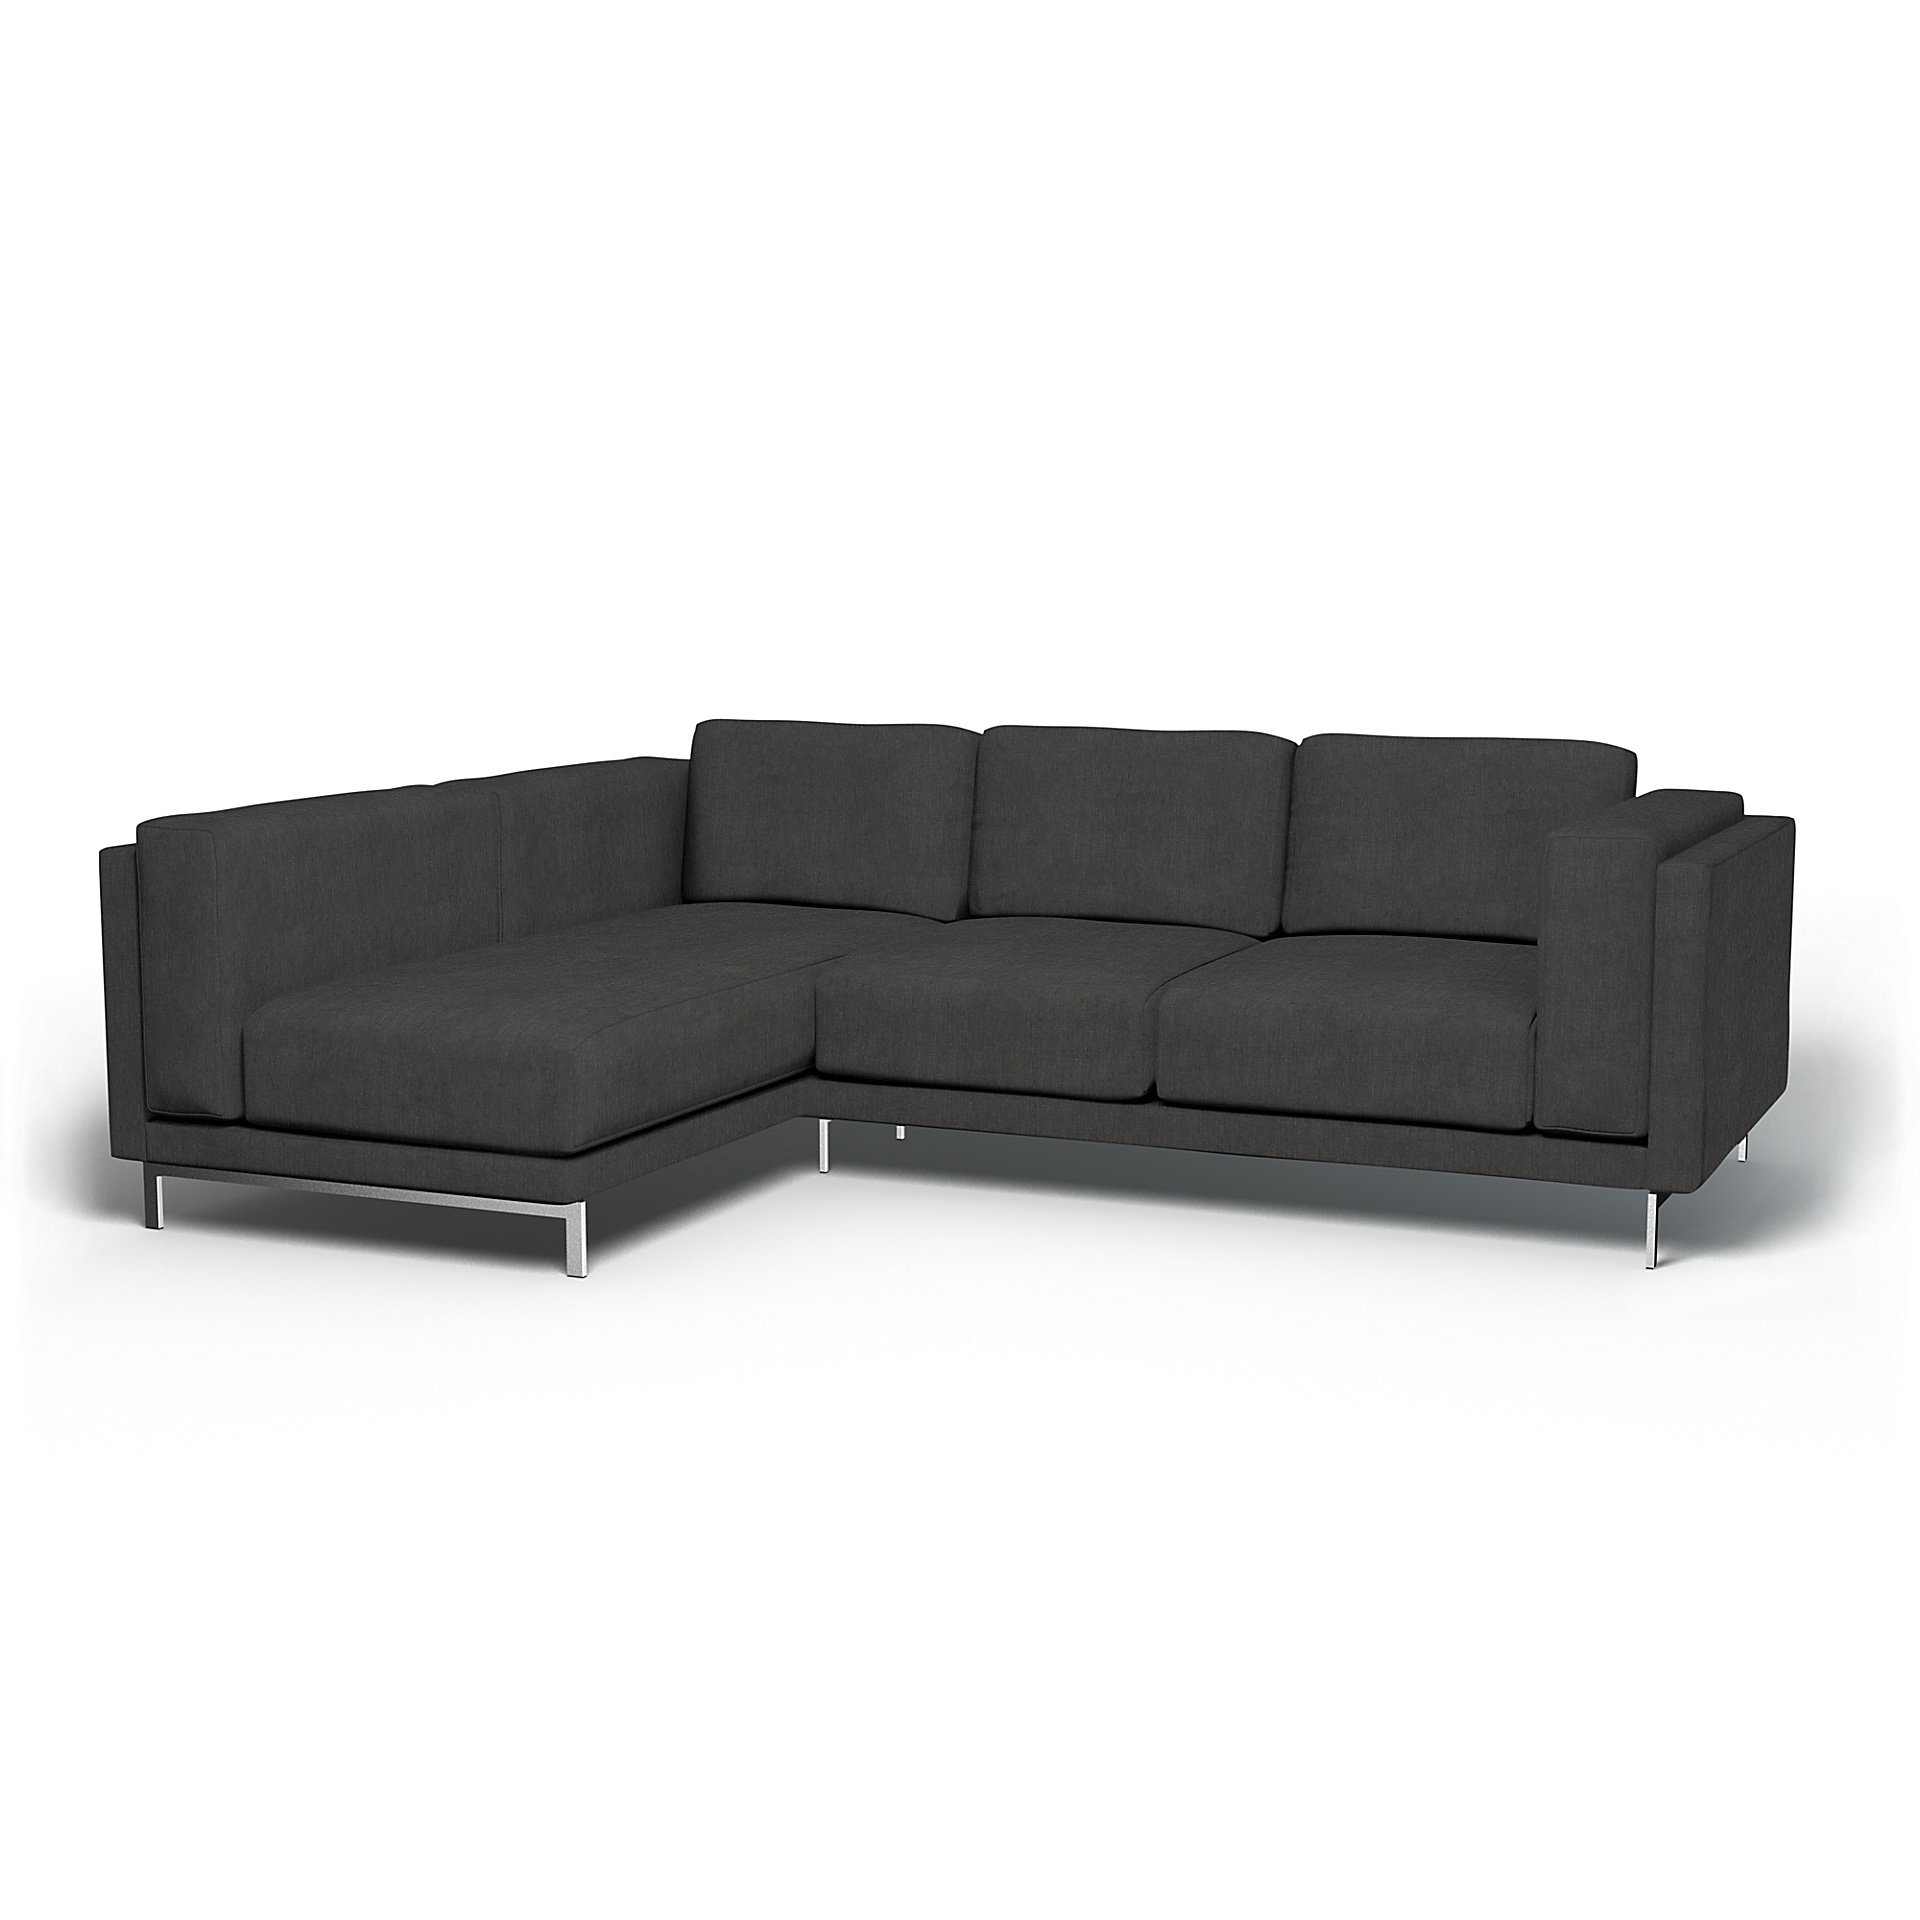 IKEA - Nockeby 3 Seater Sofa with Left Chaise Cover, Espresso, Linen - Bemz